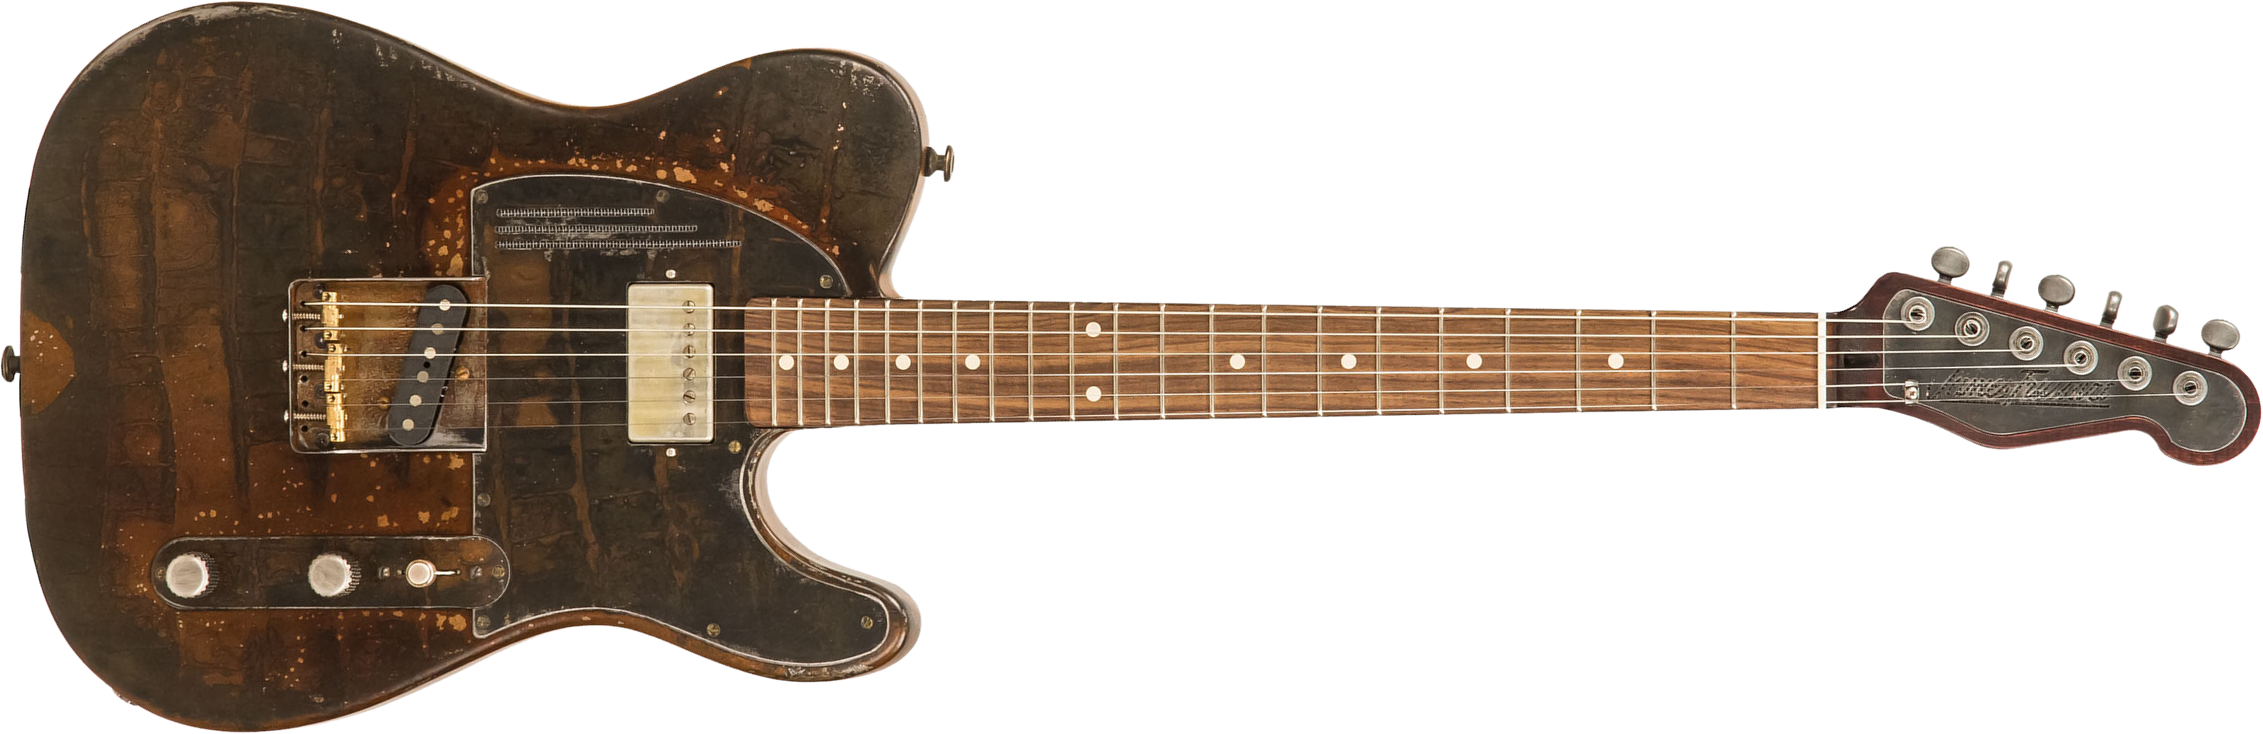 James Trussart Steelcaster Plain Back Sh Pf #20034 - Rust O Matic Gator - Semi-Hollow E-Gitarre - Main picture